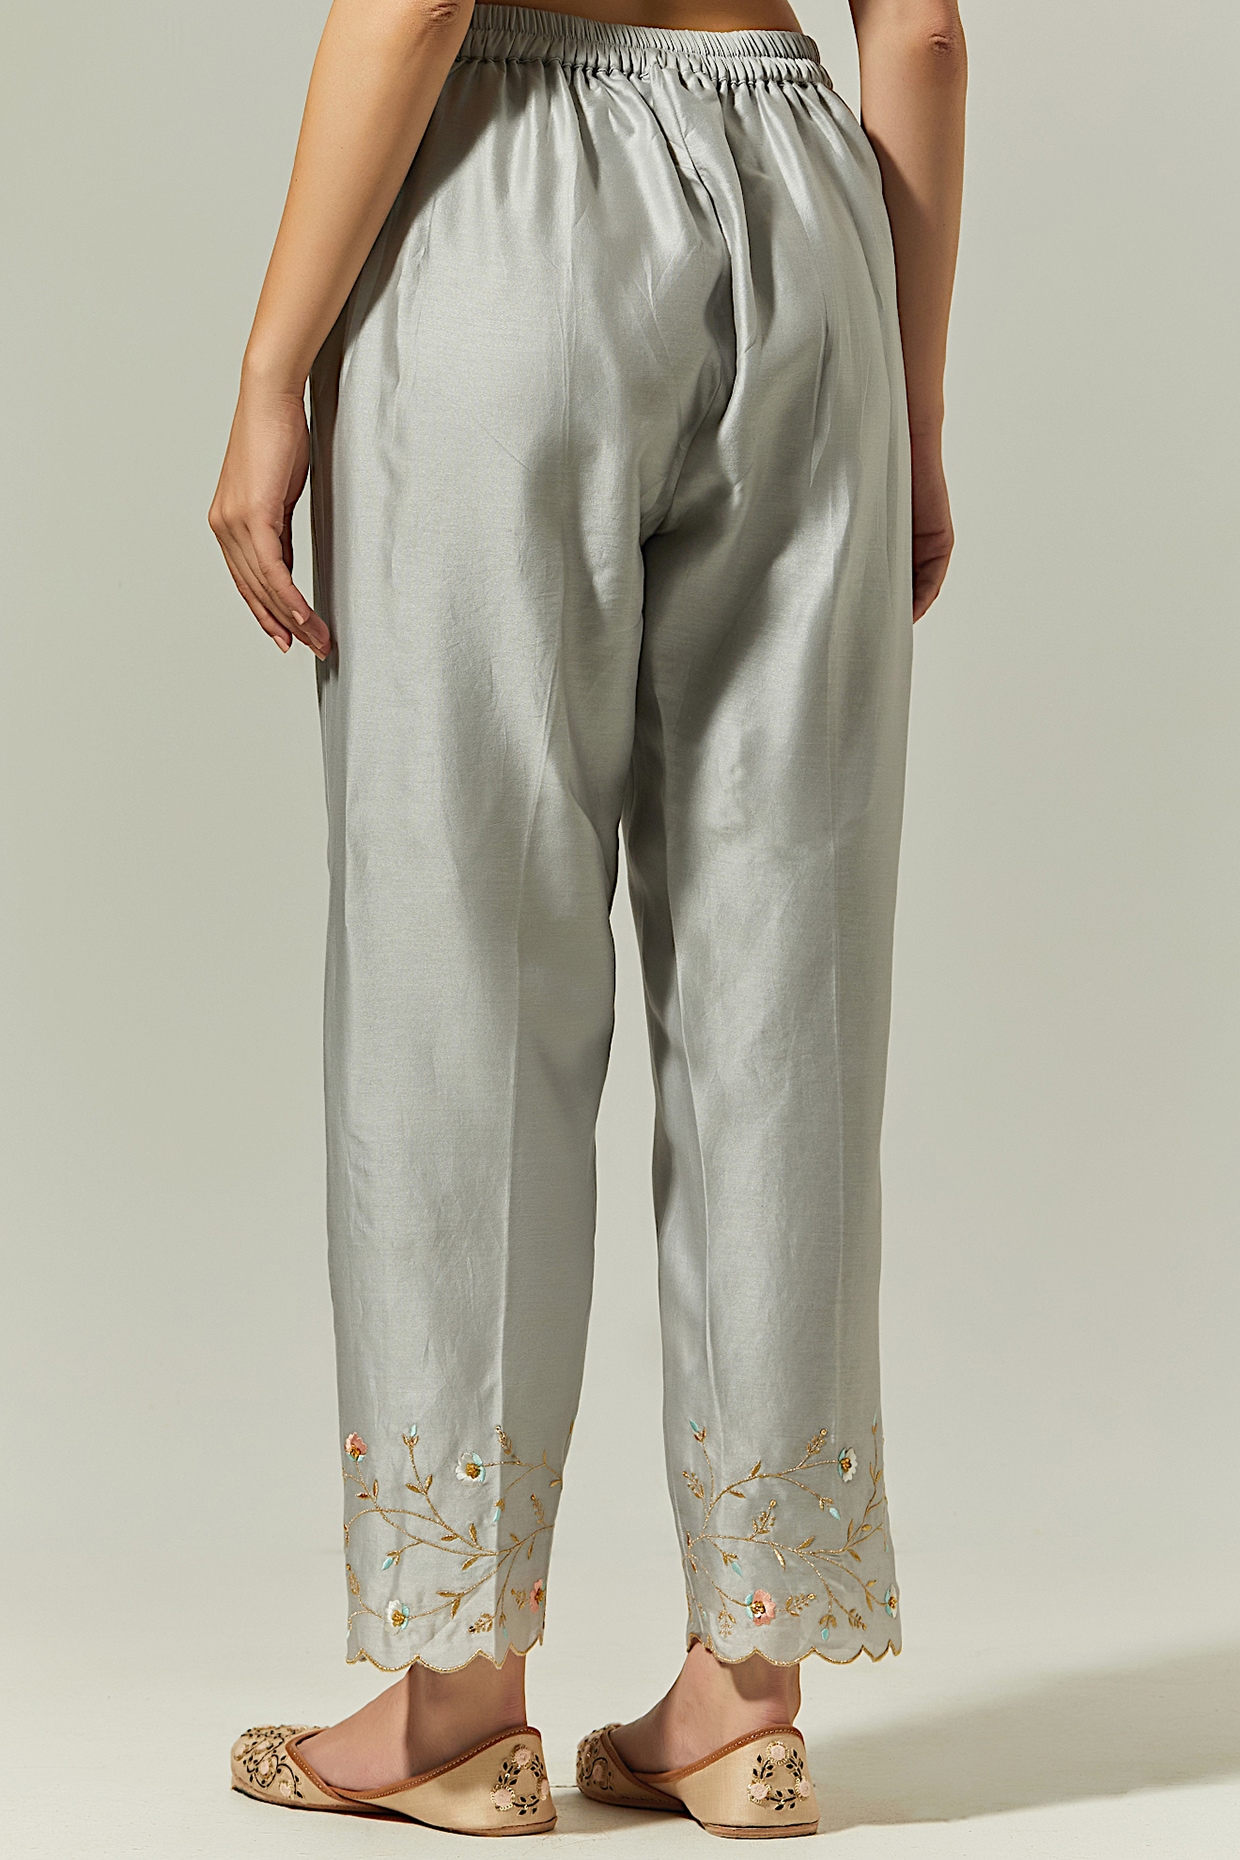 Buy Grey embroidered palazzo pants -Designer Wear - Ensemble